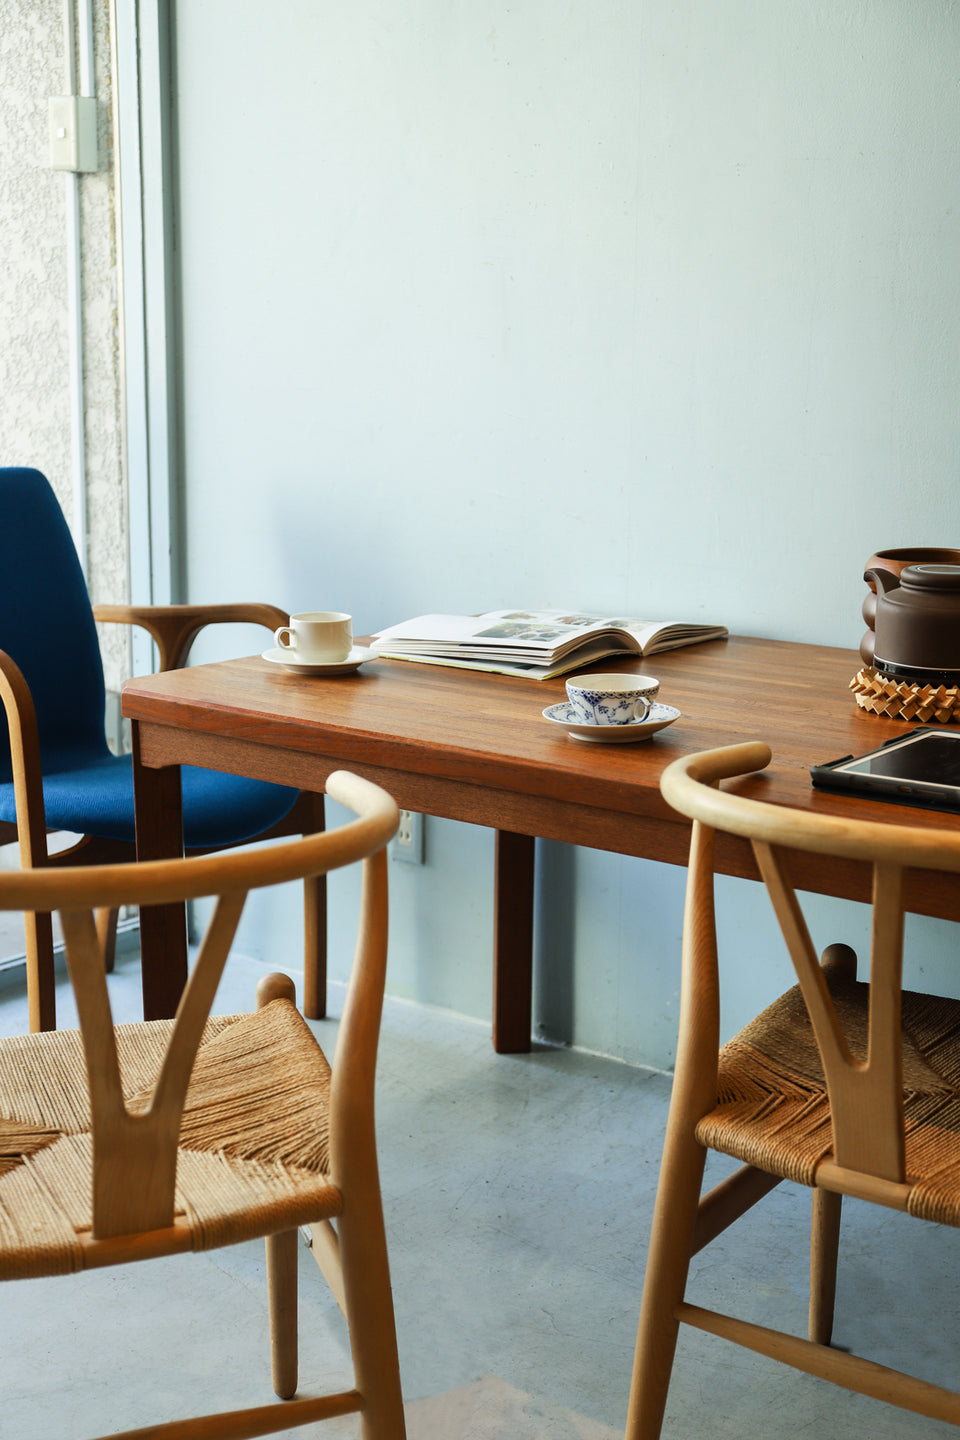 Japanese Vintage Teakwood Dining Table/ジャパンヴィンテージ ダイニングテーブル ソファテーブル チーク材 集成材 北欧モダン